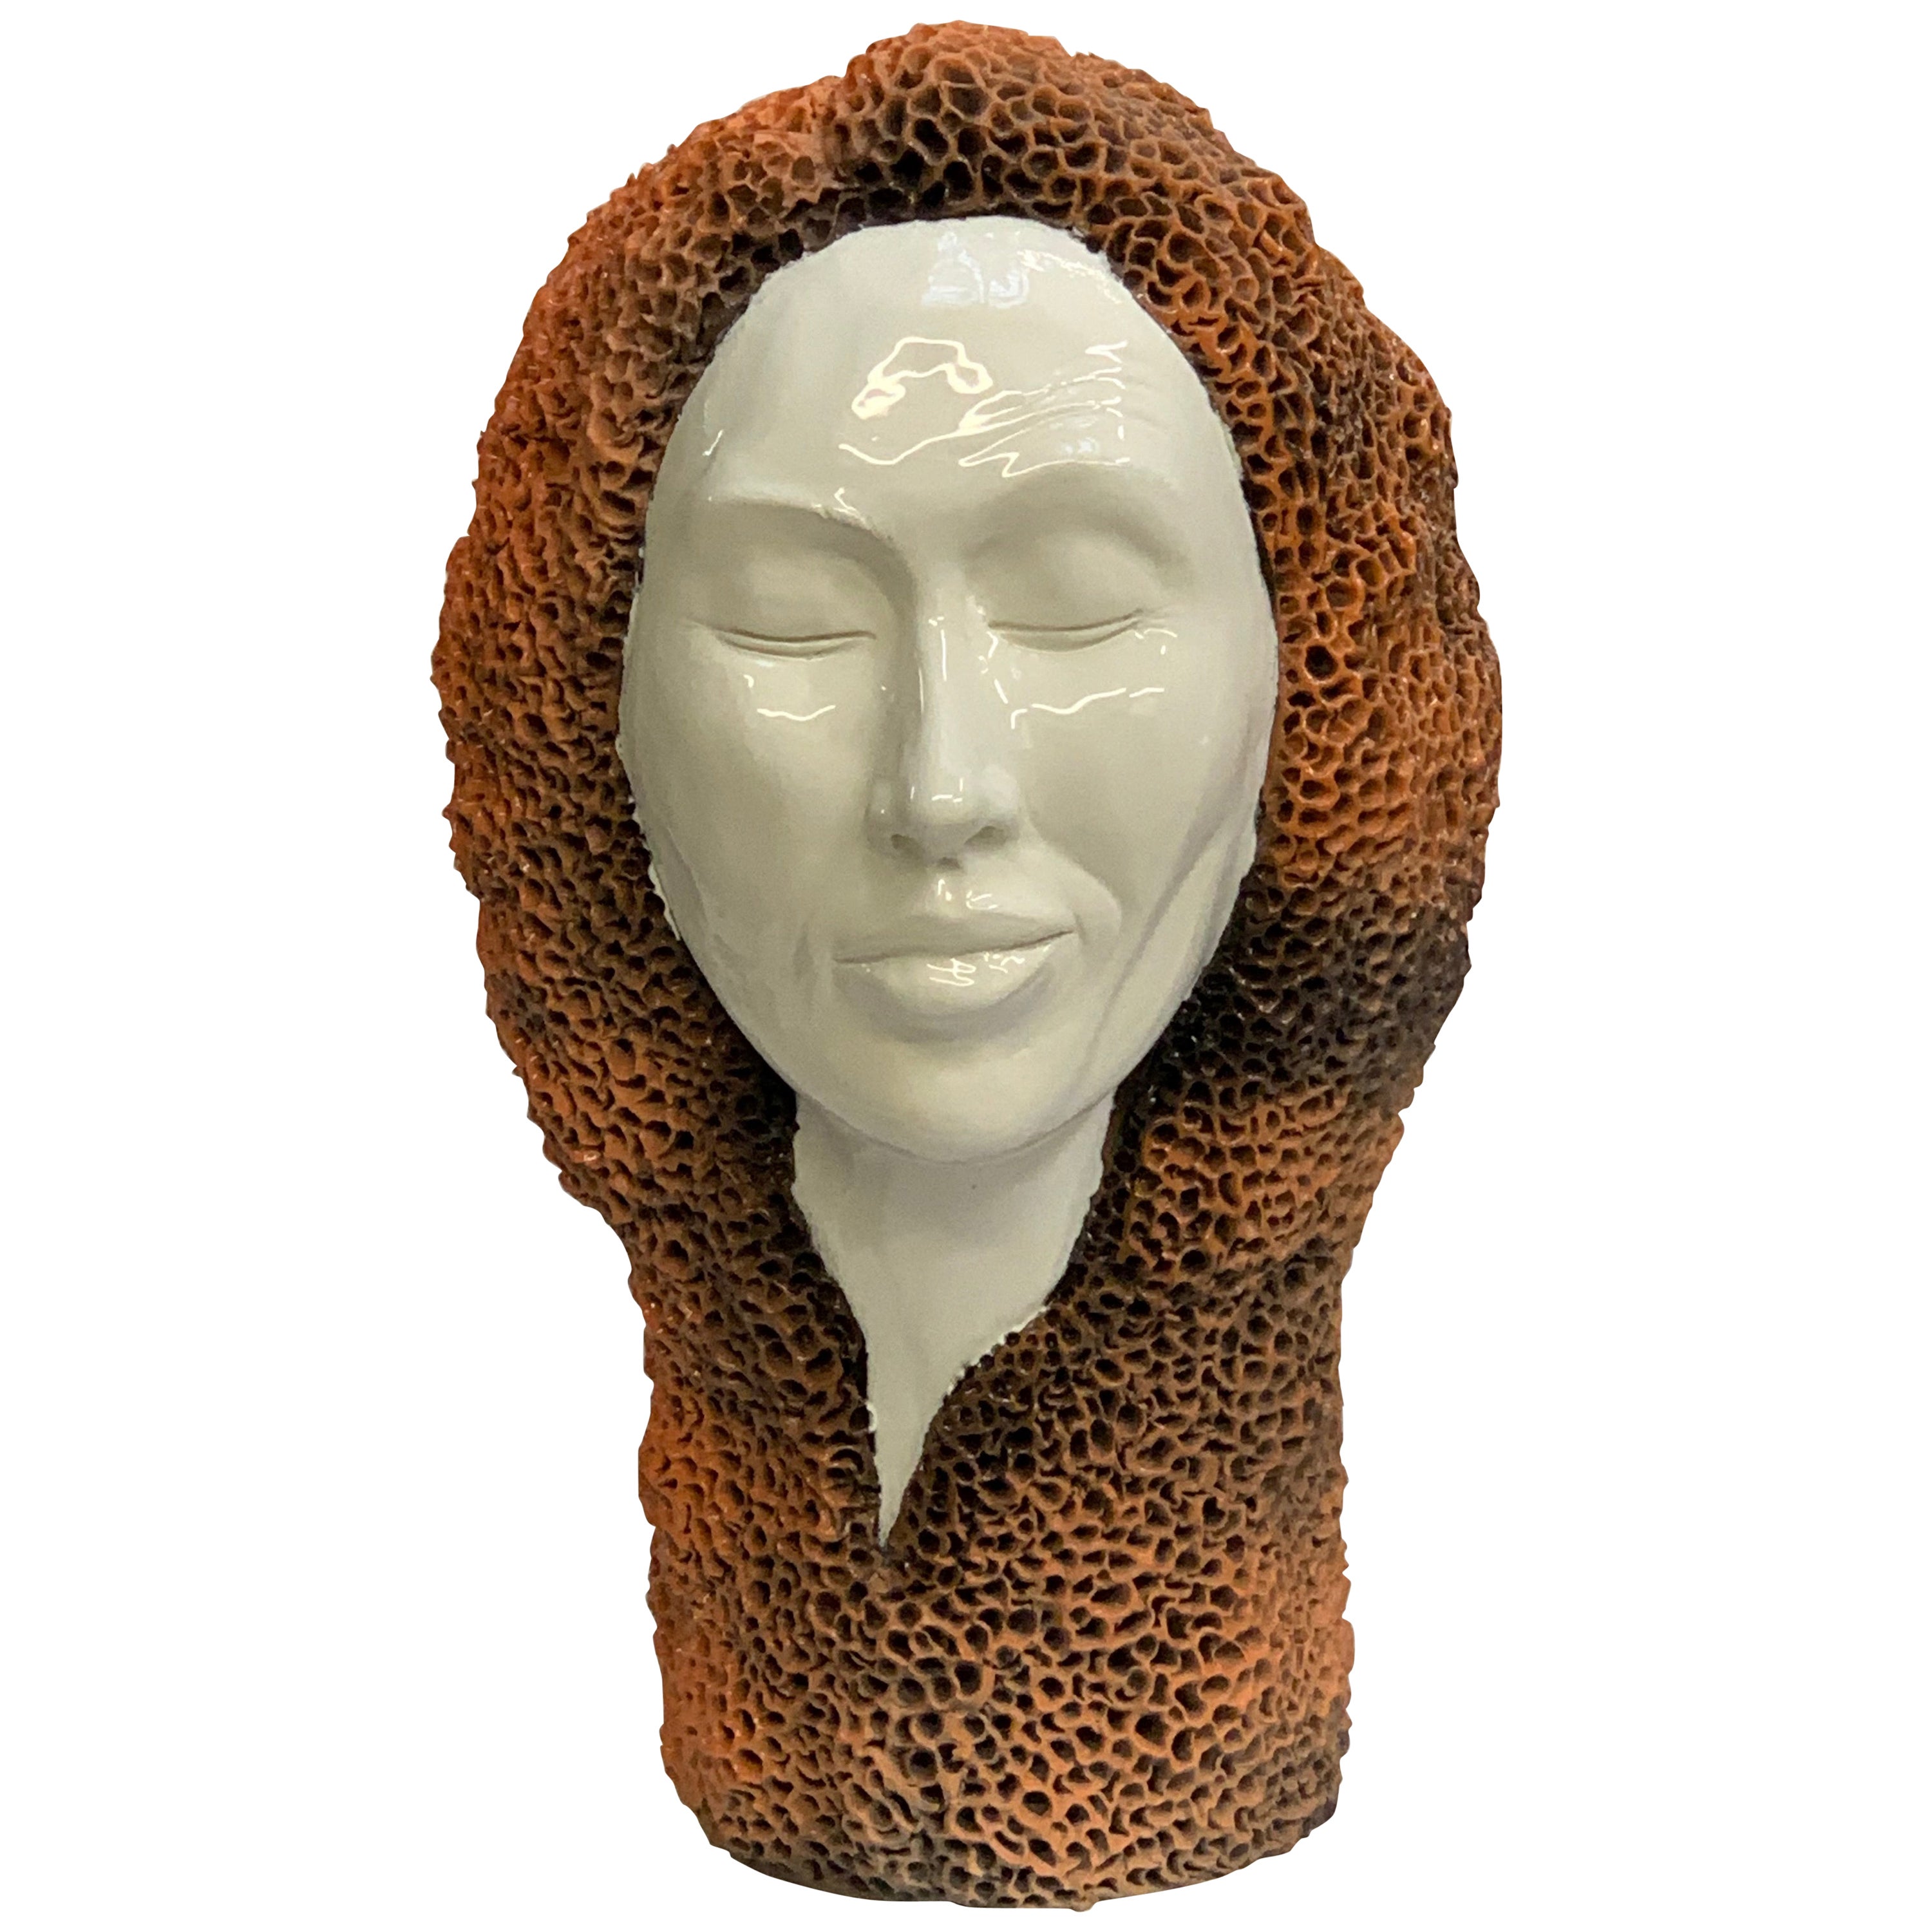 Dekoratives Keramikstück mit Frauenkopf aus Sponge, handgefertigt, Italien, 2021, handgefertigt